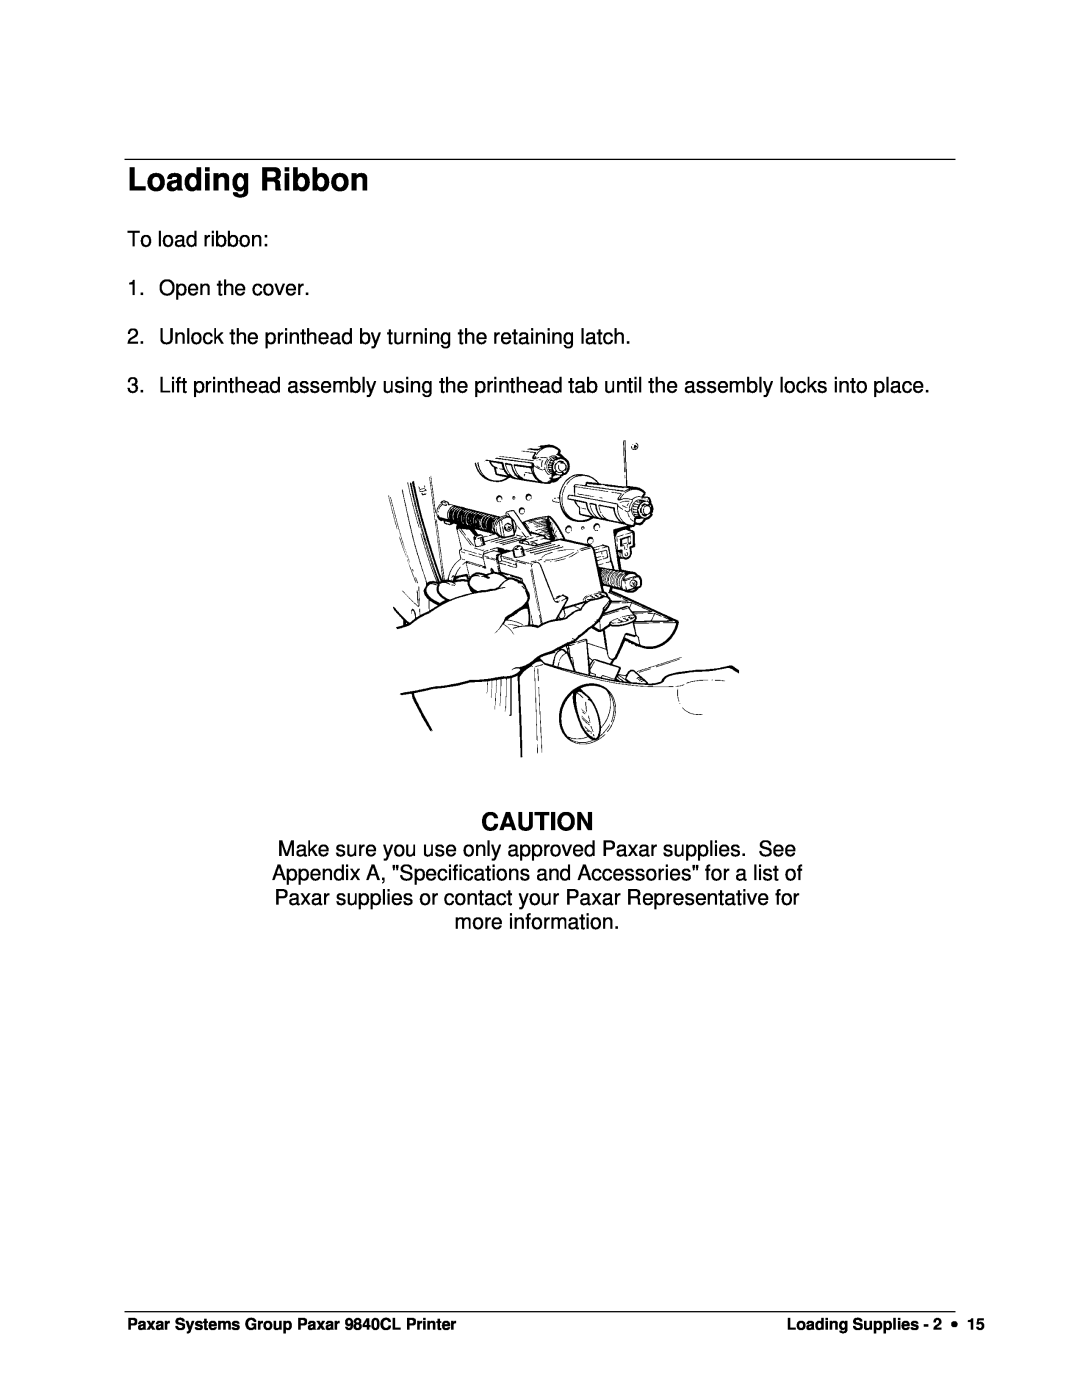 Paxar 9840CL user manual Loading Ribbon 